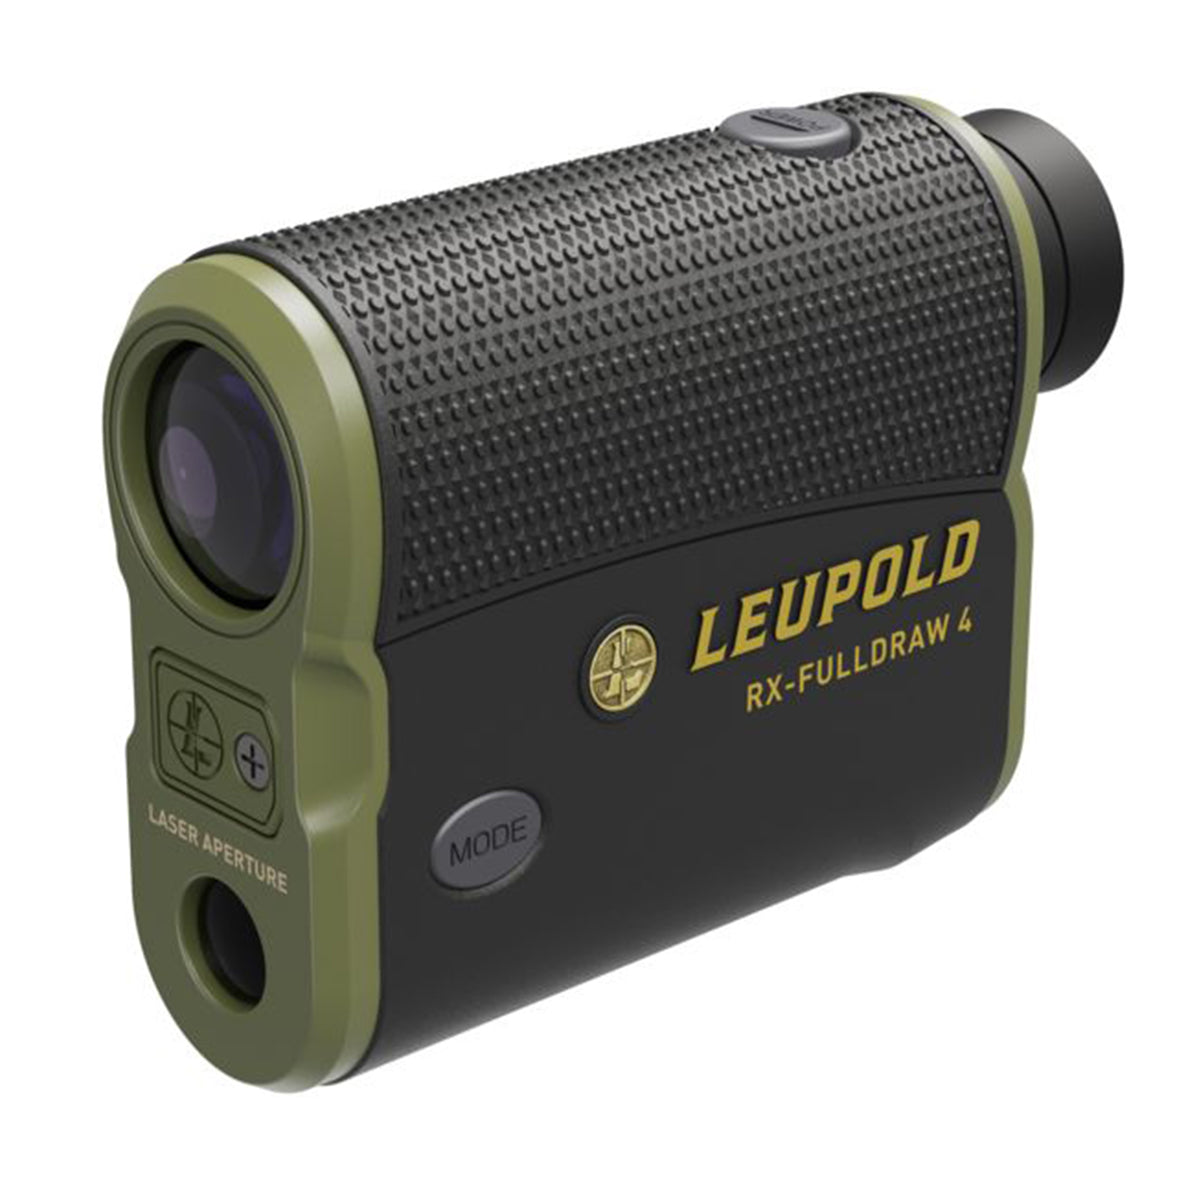 Leupold RX-Fulldraw 4 Rangefinder in  by GOHUNT | Leupold - GOHUNT Shop